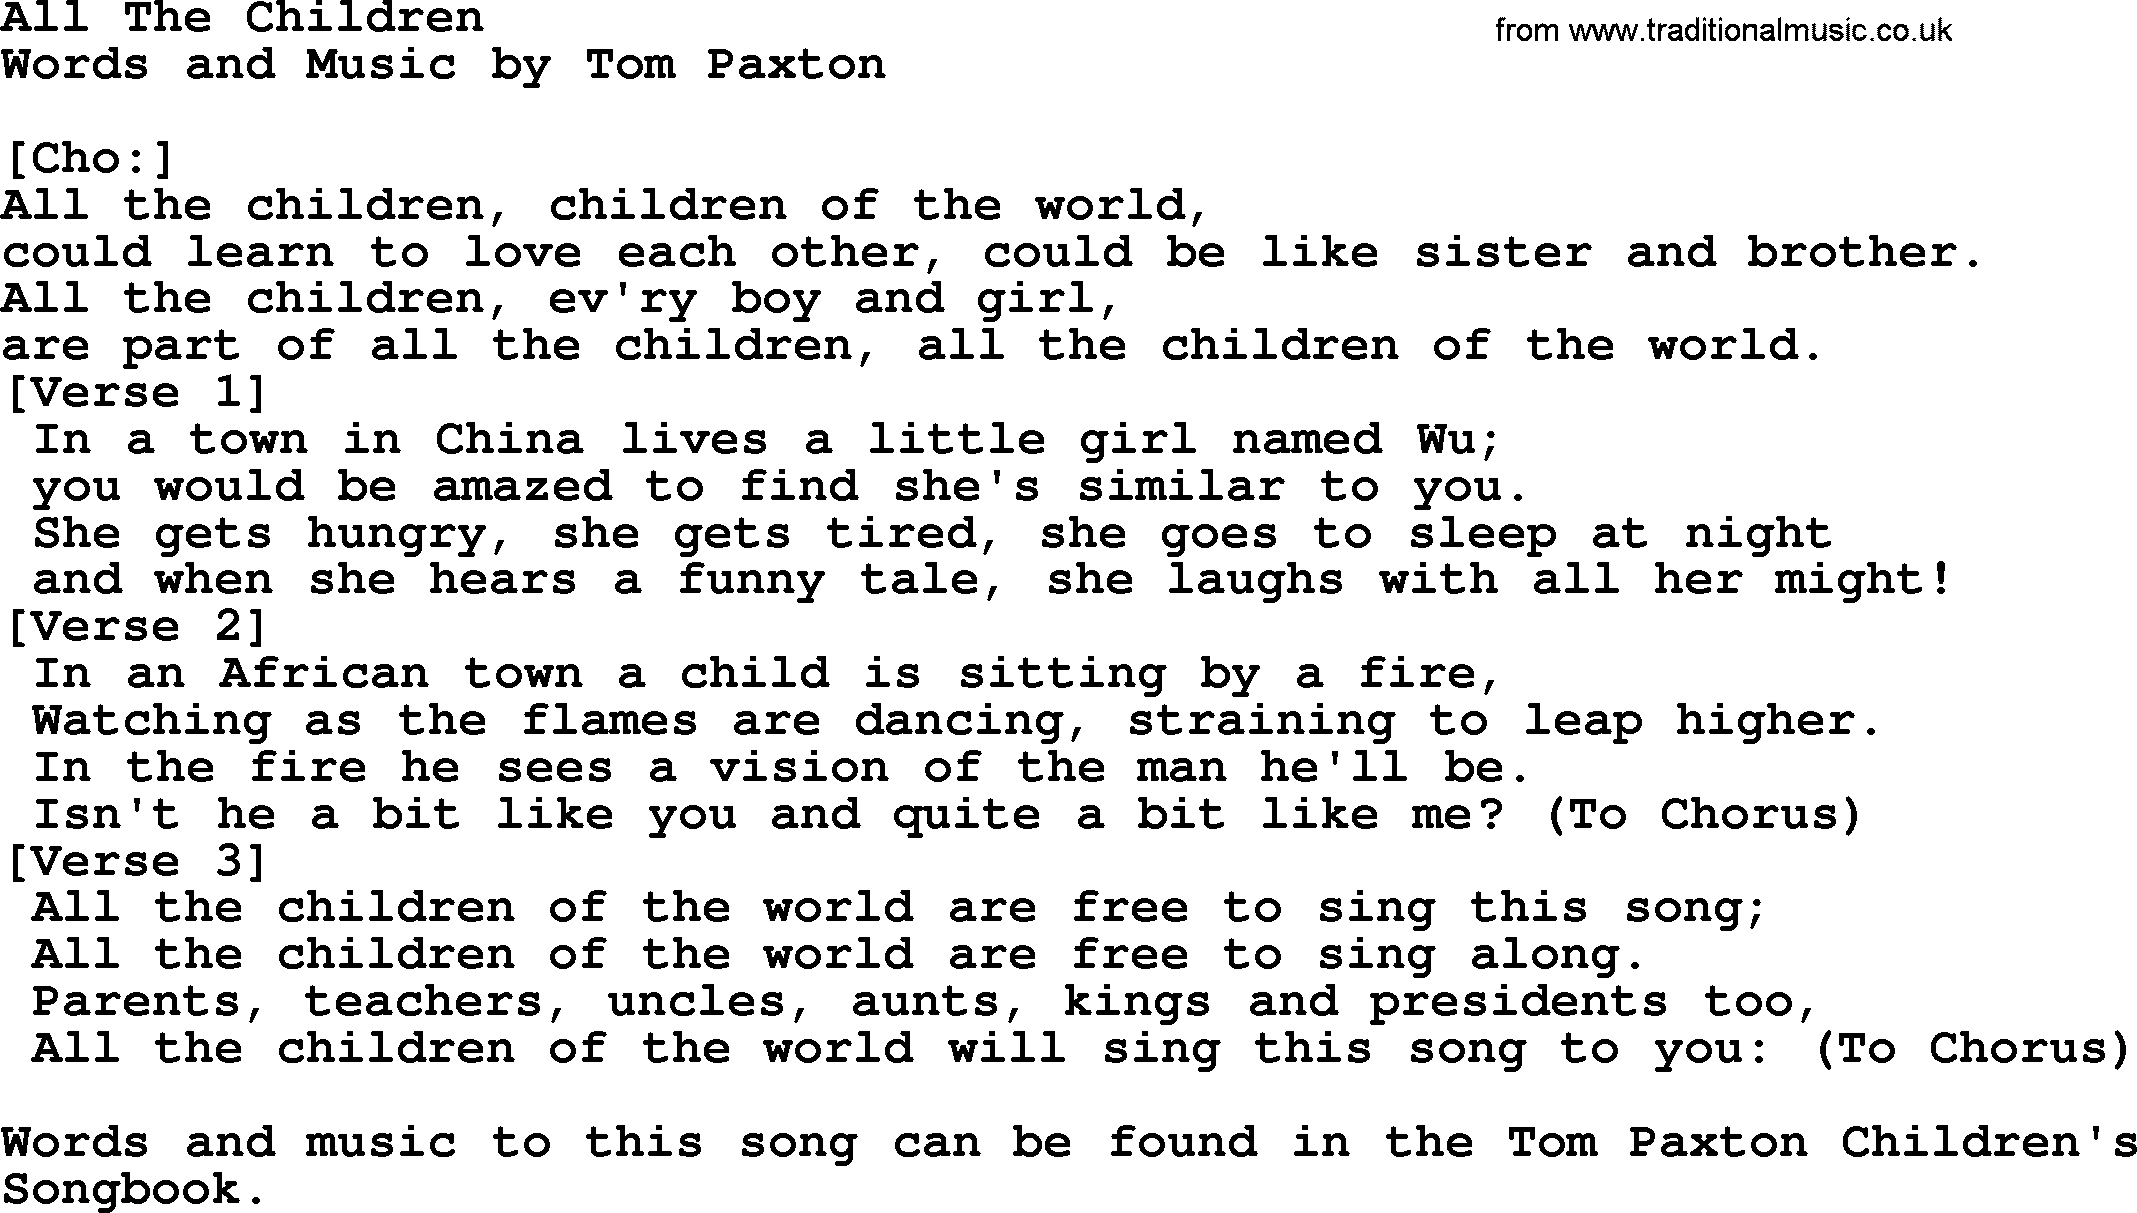 Tom Paxton song: All The Children, lyrics